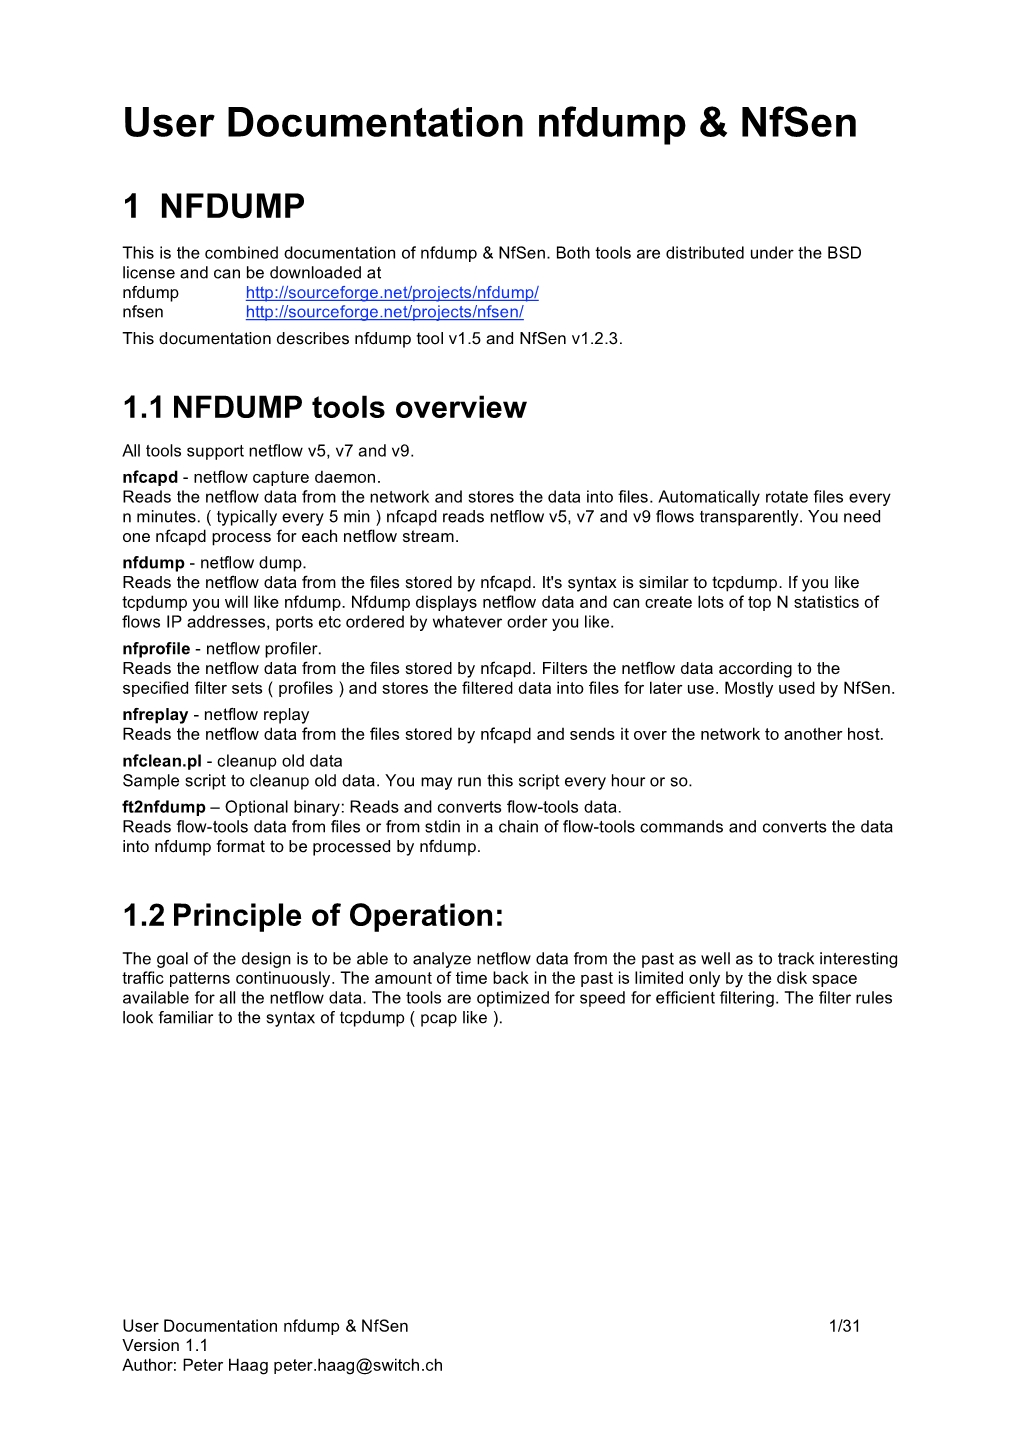 User Documentation Nfdump & Nfsen